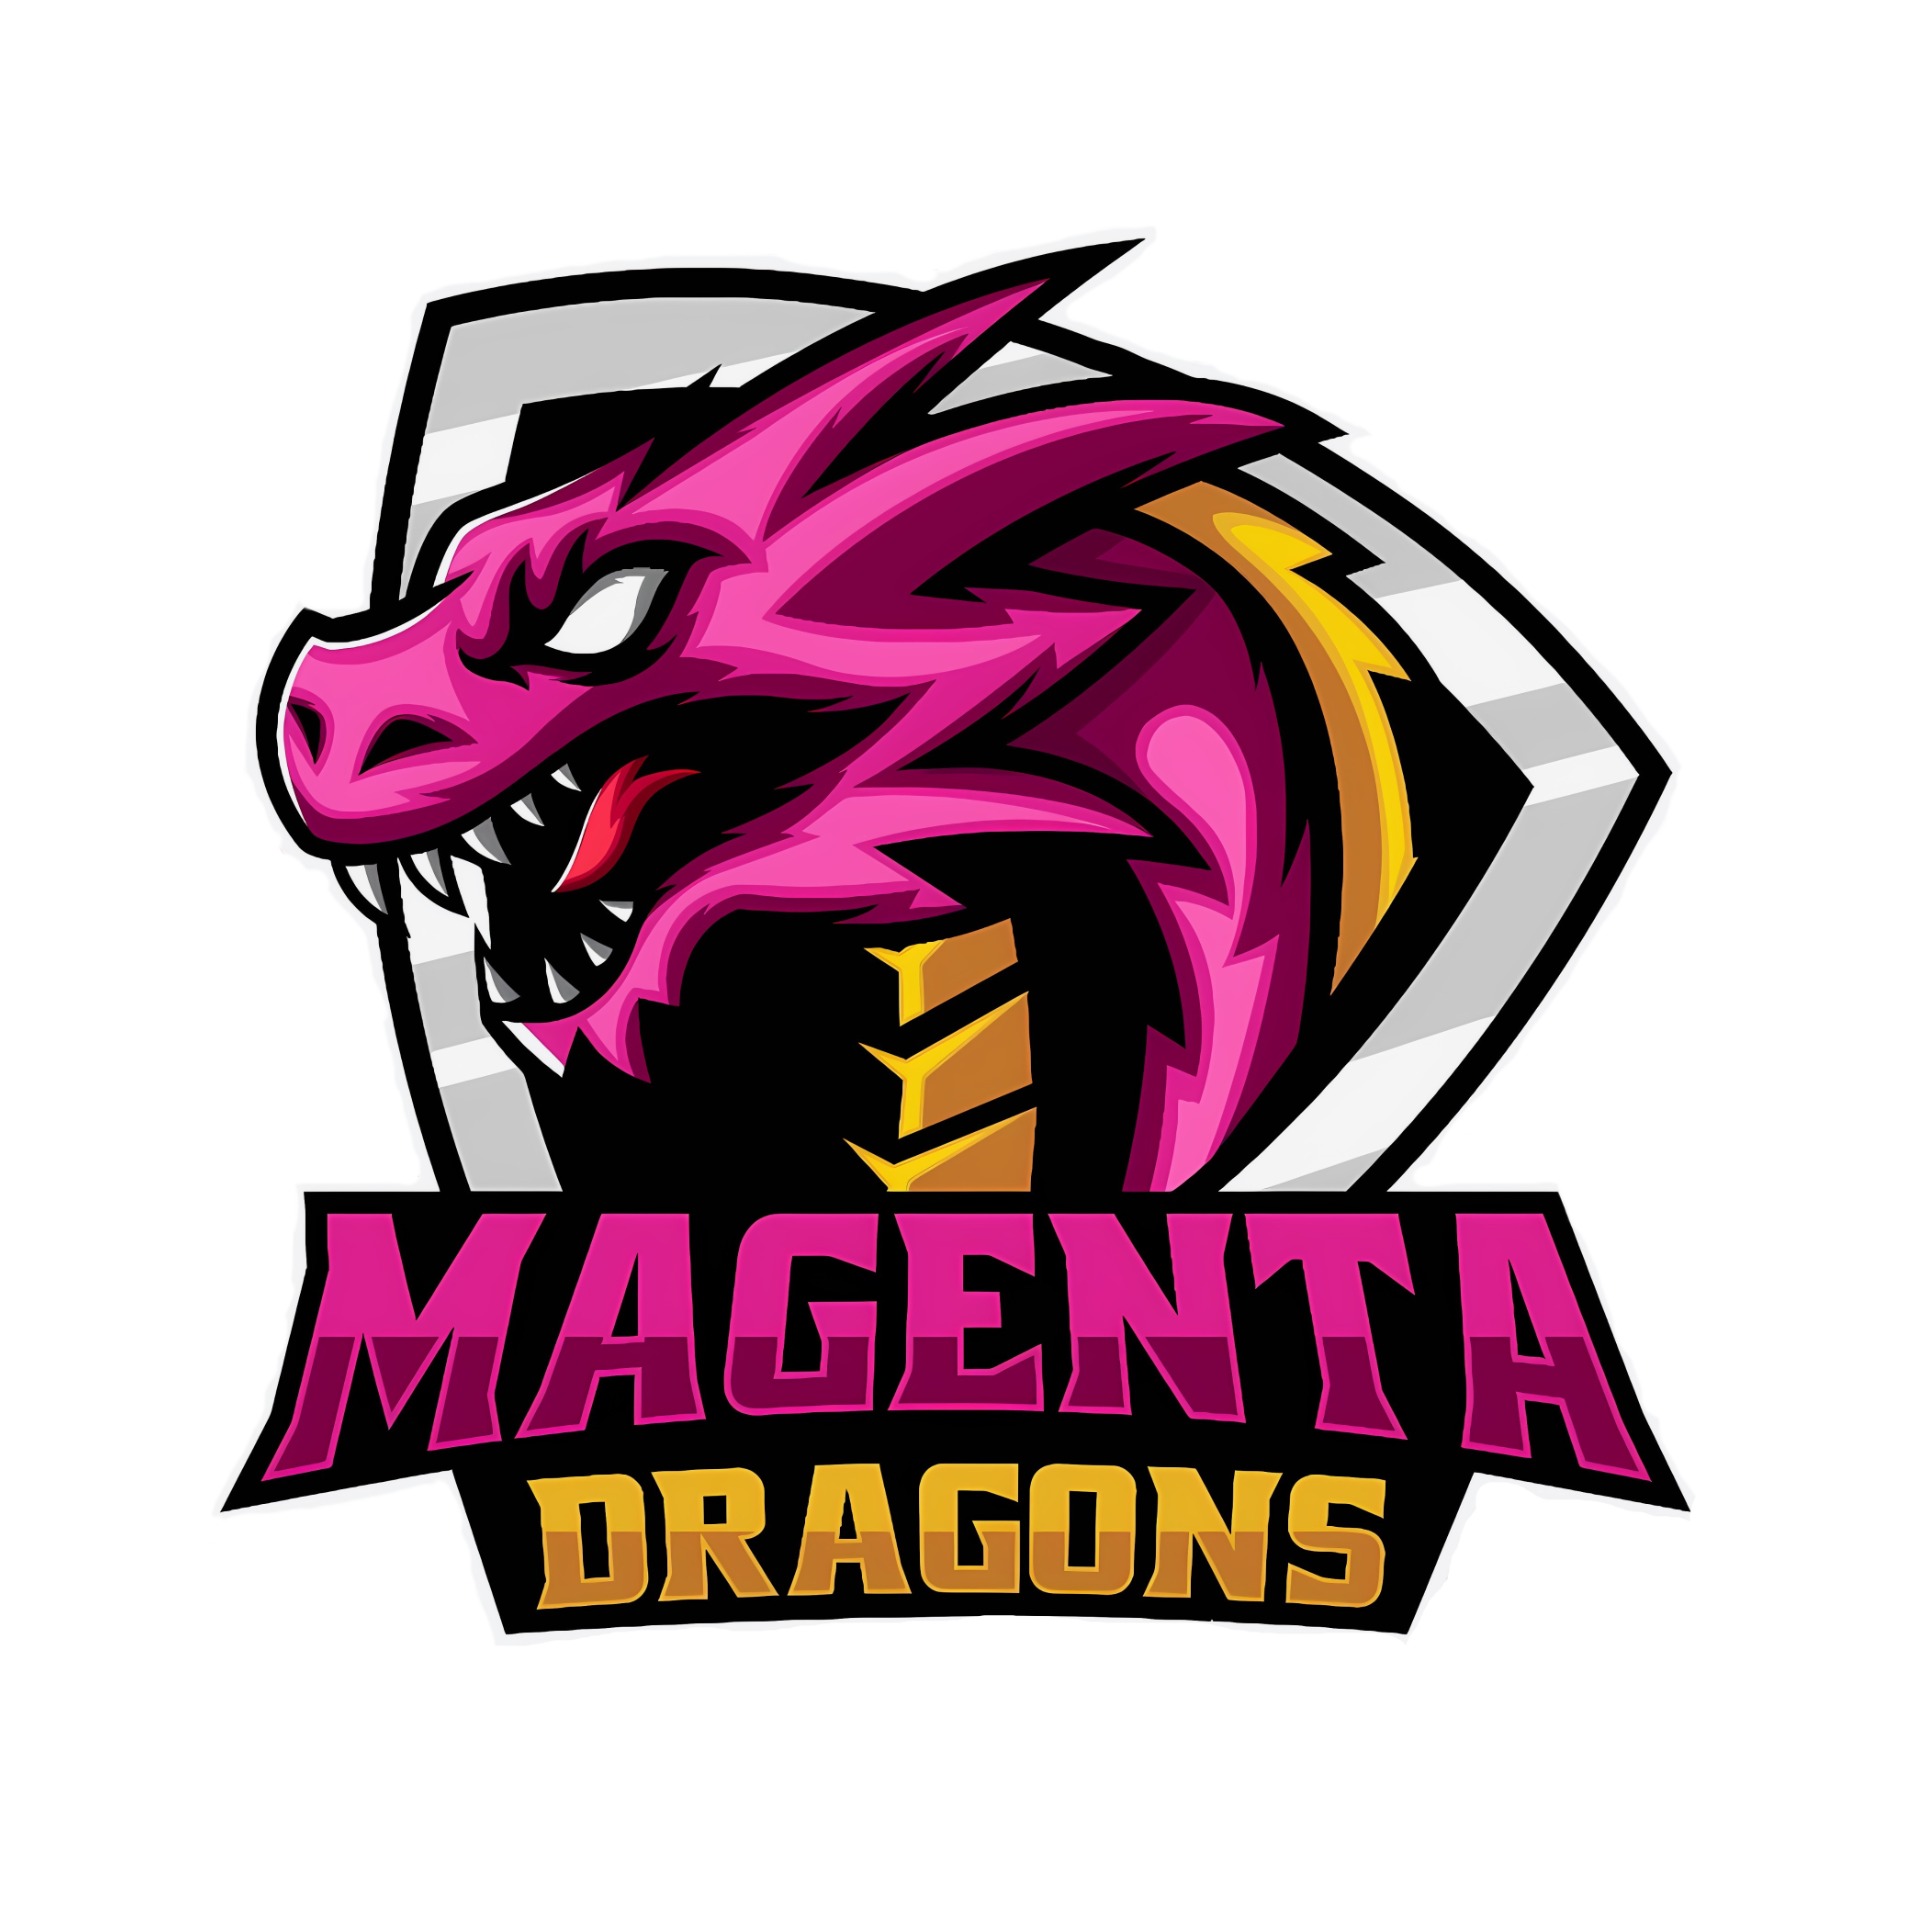 Magenta Dragons